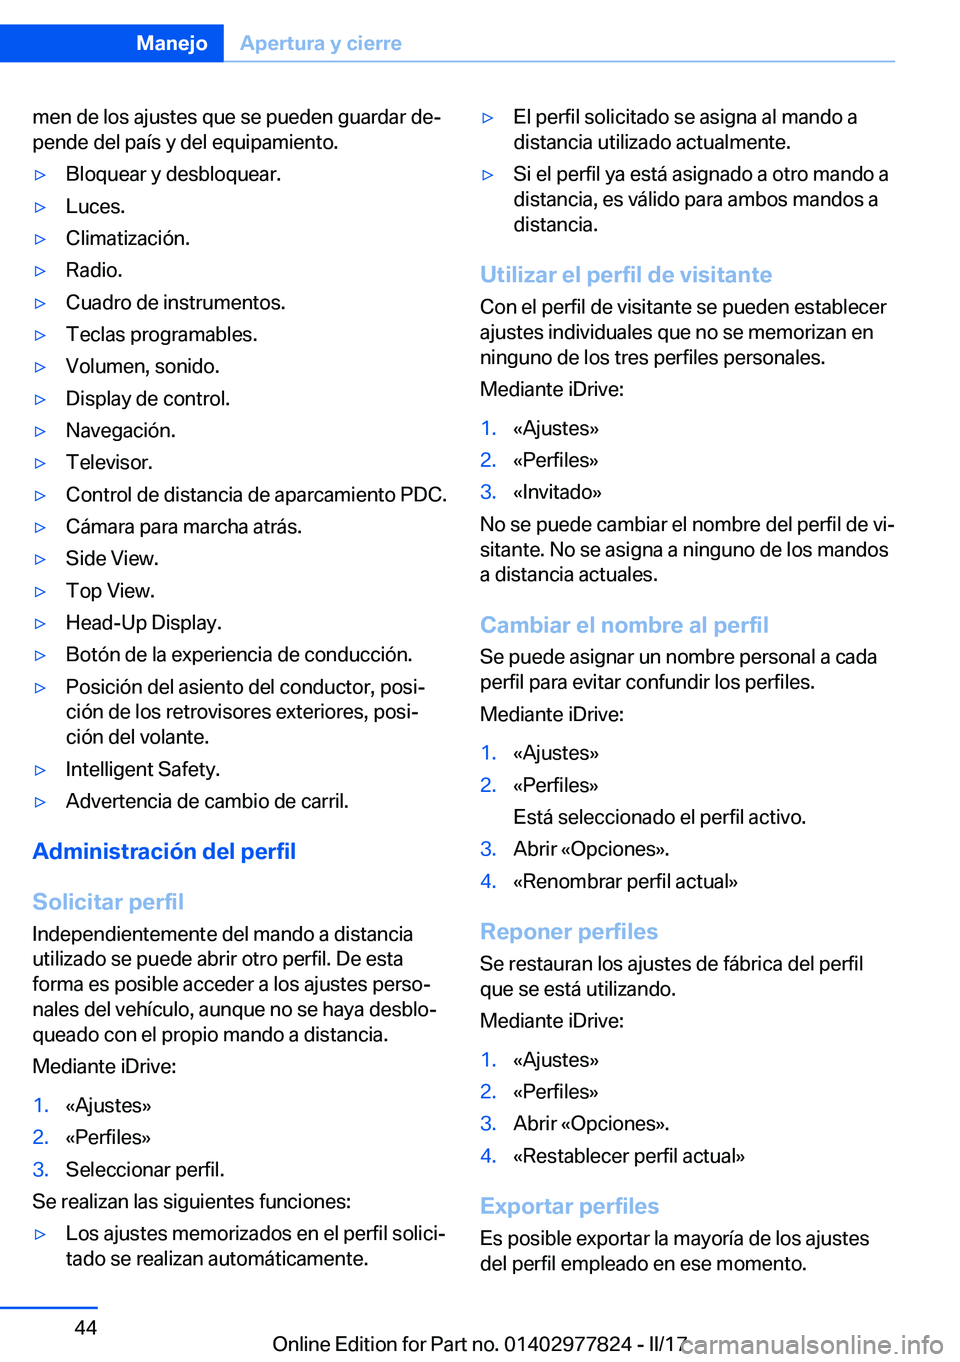 BMW X3 2017  Manuales de Empleo (in Spanish) �m�e�n� �d�e� �l�o�s� �a�j�u�s�t�e�s� �q�u�e� �s�e� �p�u�e�d�e�n� �g�u�a�r�d�a�r� �d�eª�p�e�n�d�e� �d�e�l� �p�a�